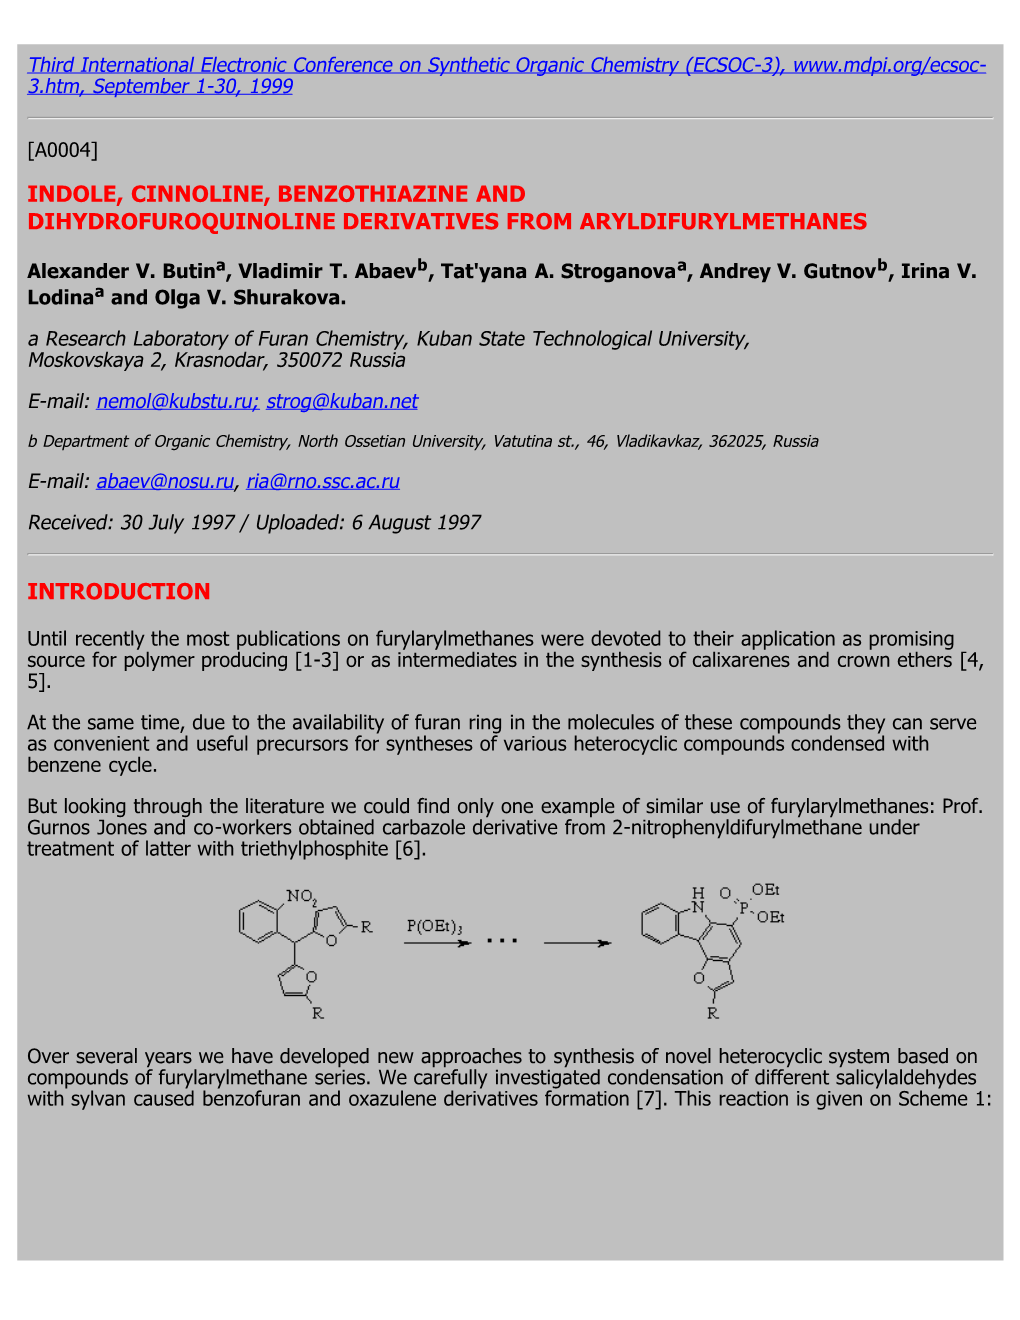 Indole, Cinnoline, Benzothiazine and Dihydrofuroquinoline Derivatives from Aryldifurylmethanes